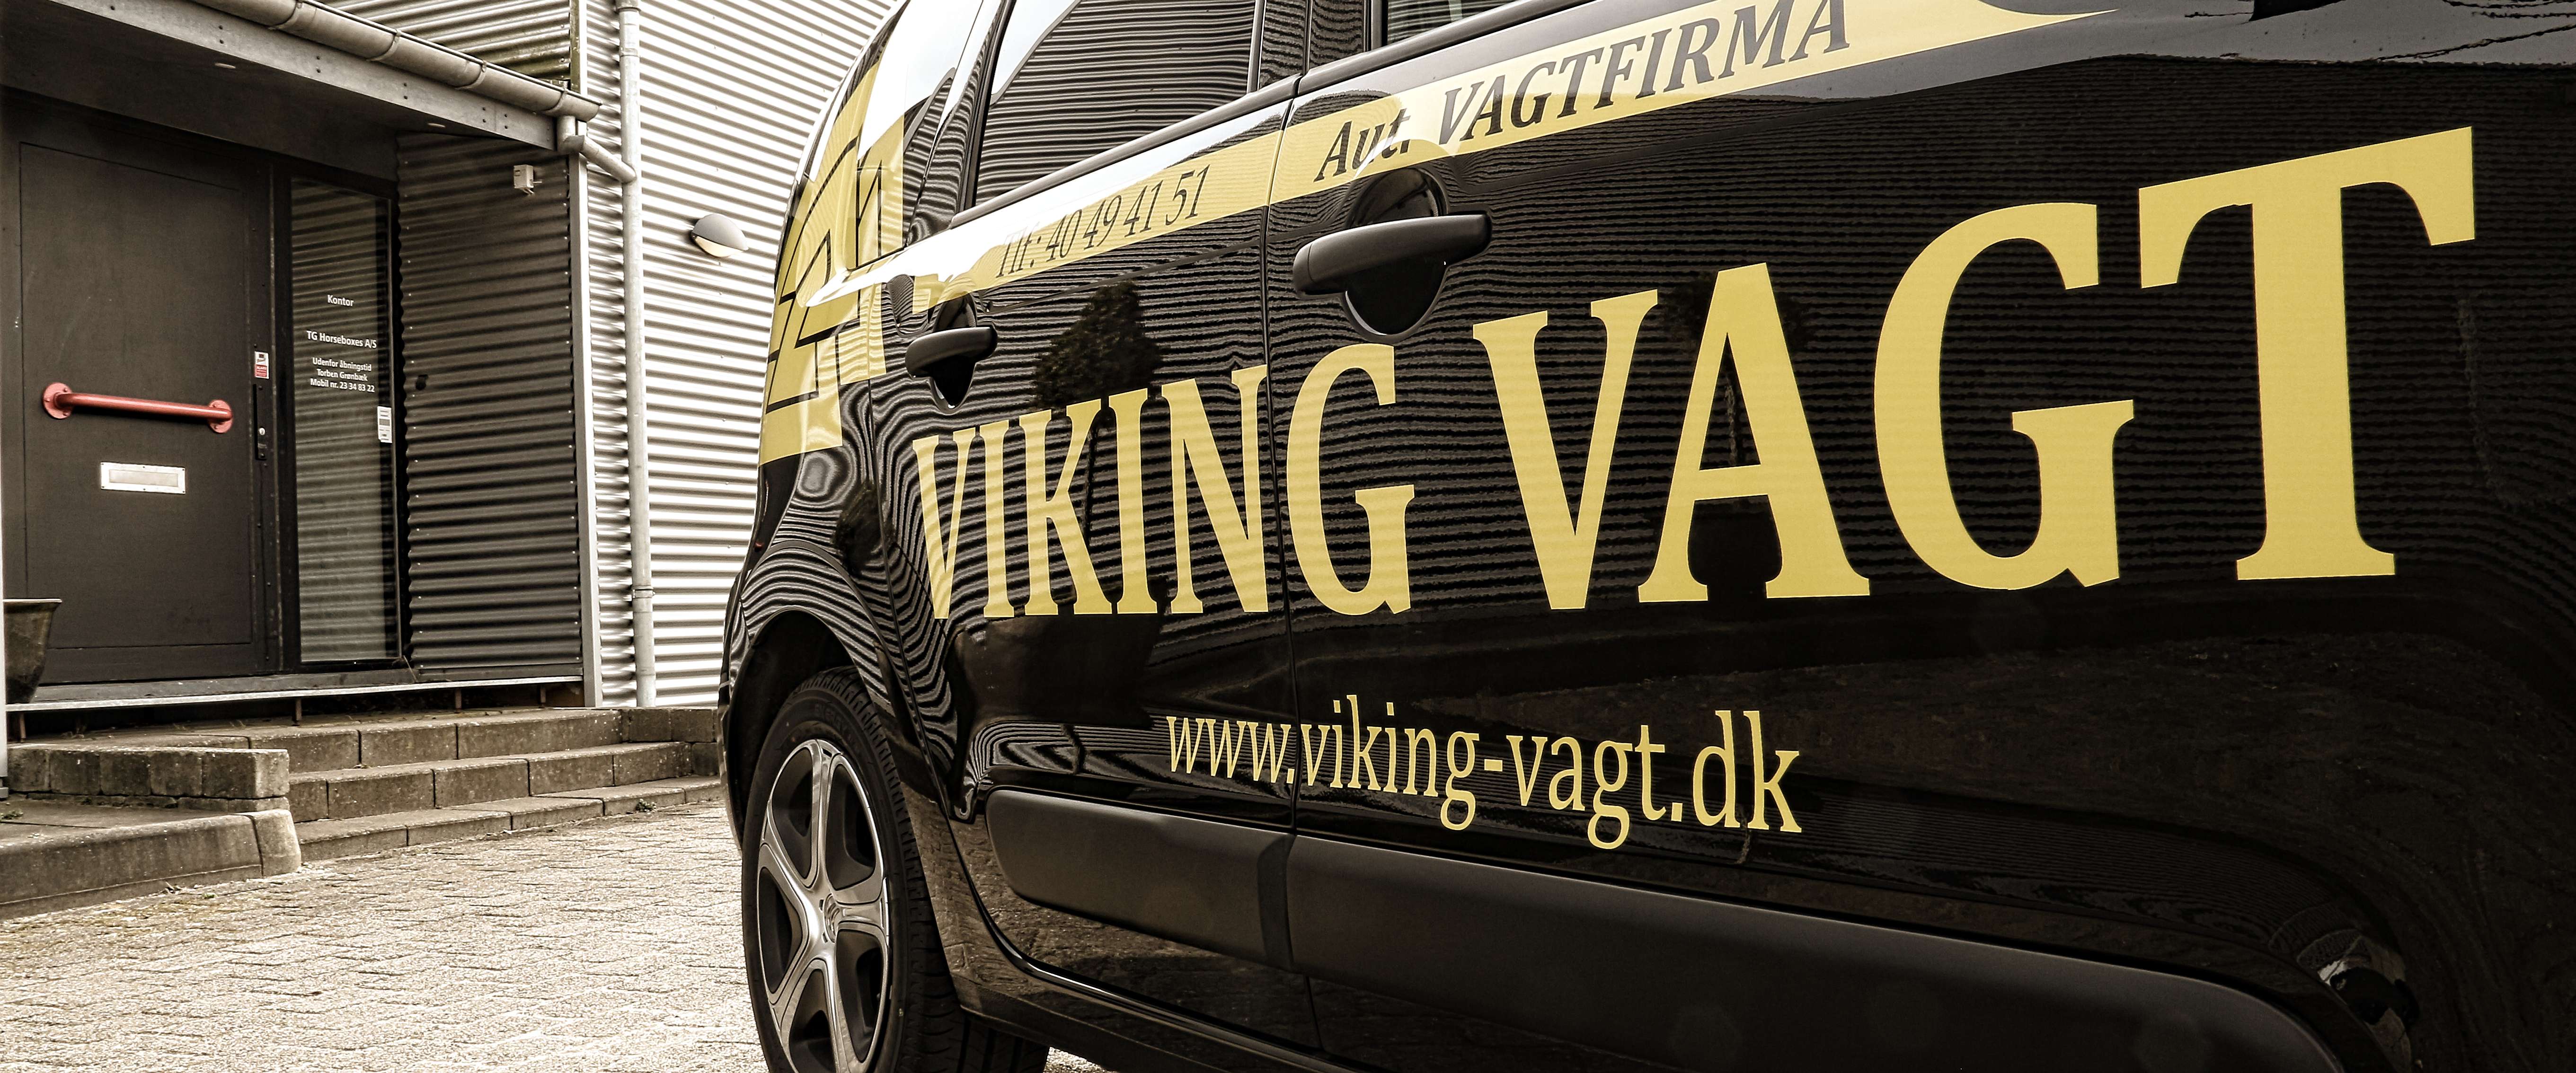 Viking-vagt-firma-8 copy1.jpg